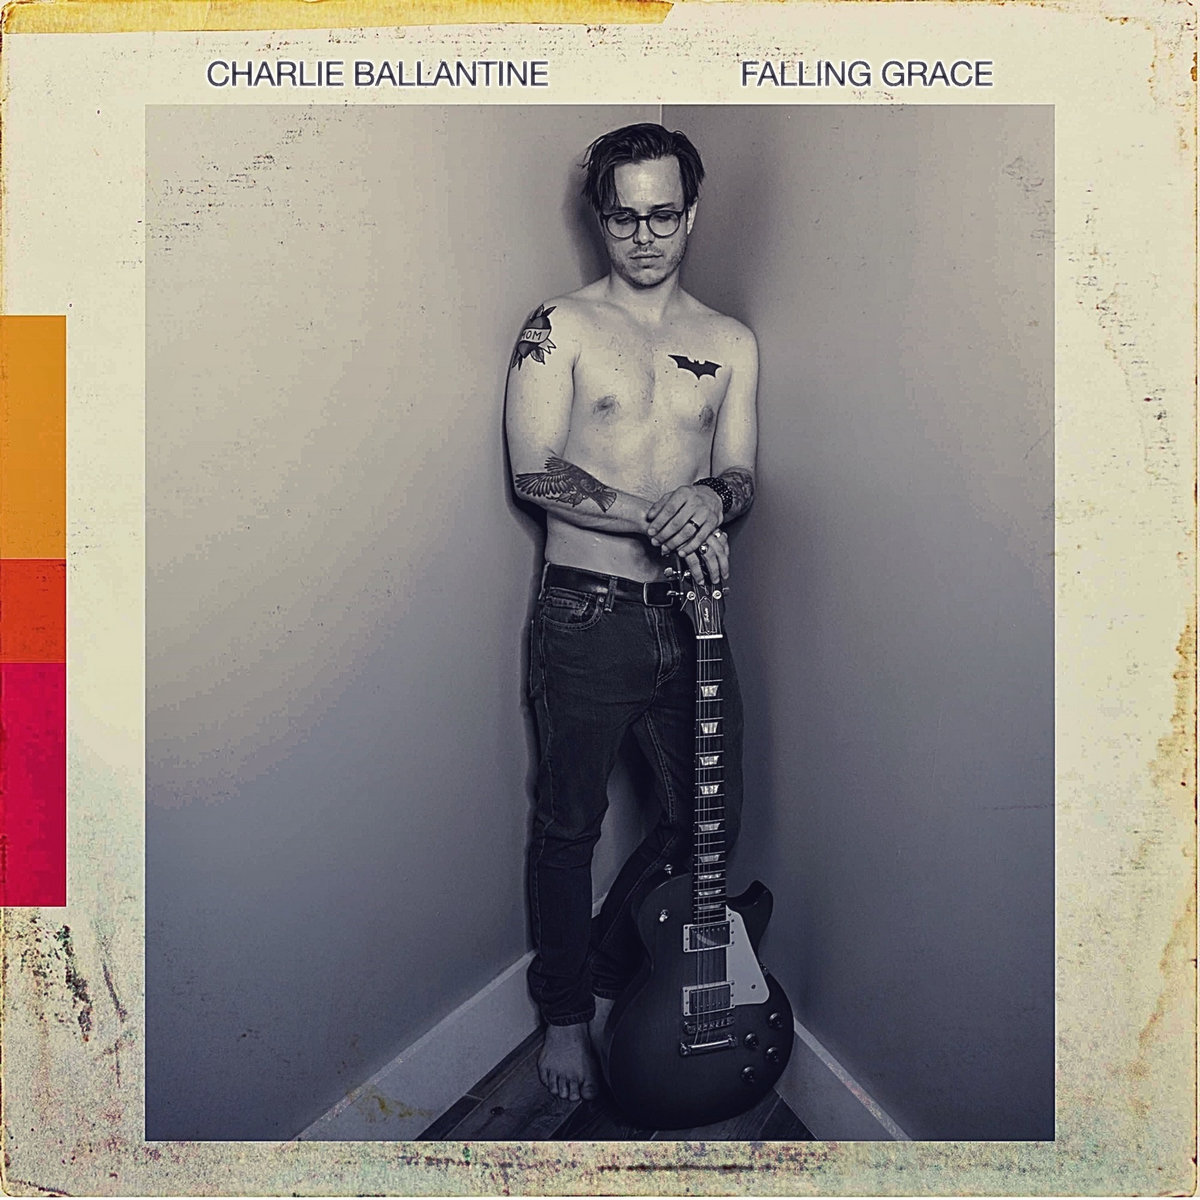 Charlie Ballantine - Falling Grace 
Charlie Ballantine: 